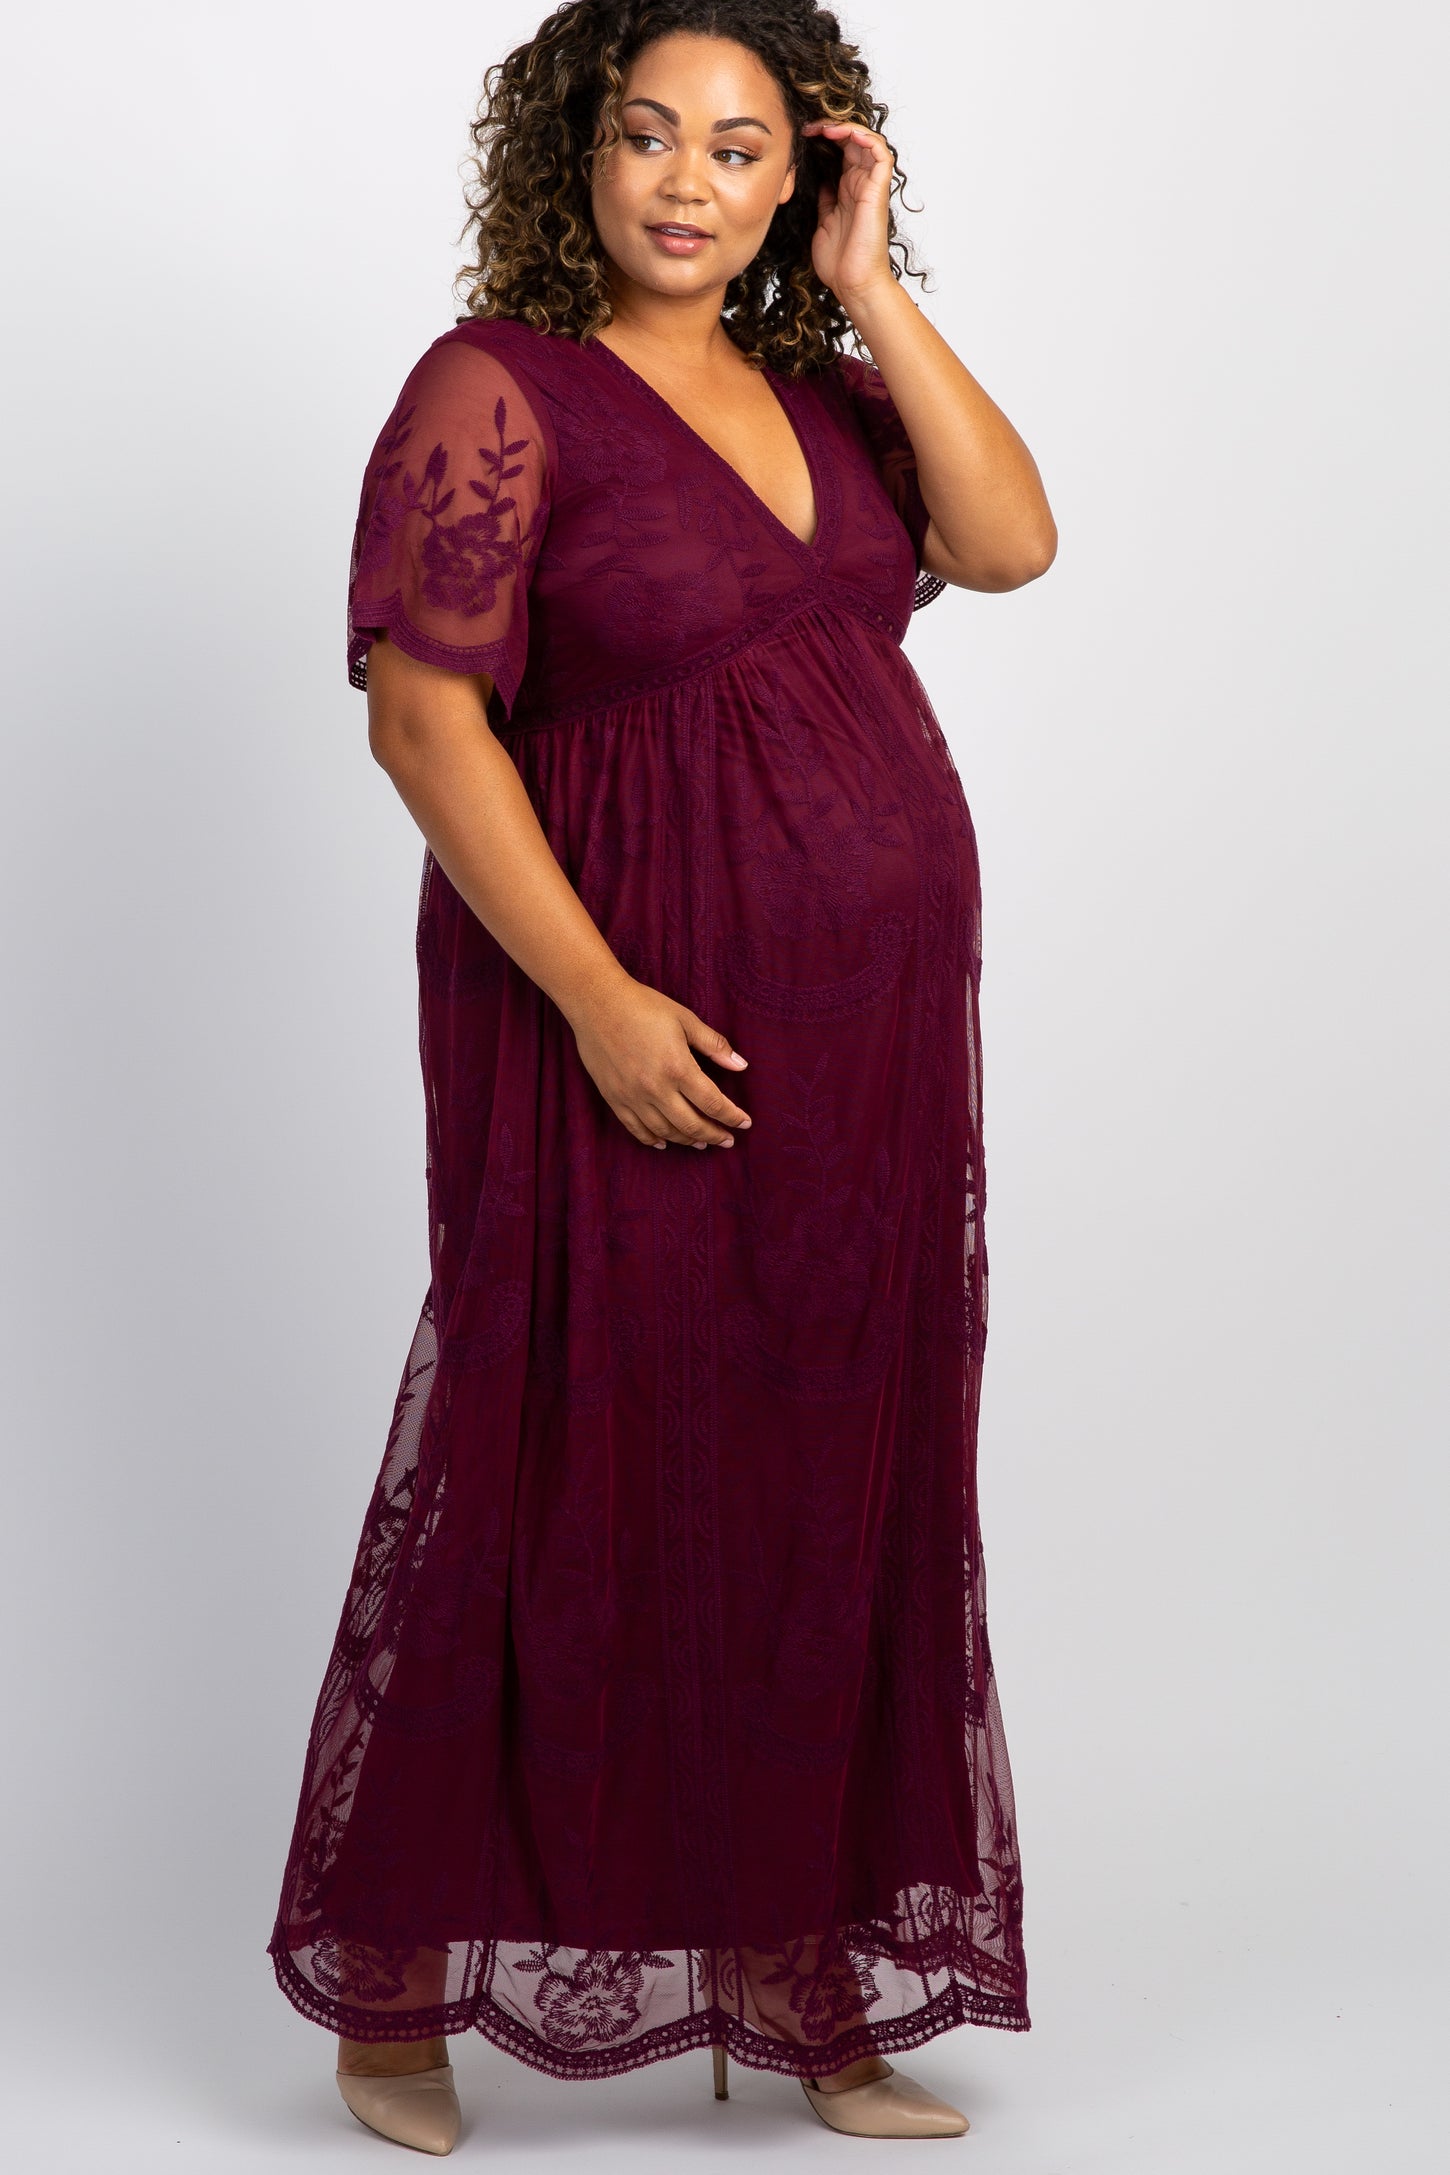 PinkBlush Burgundy Lace Mesh Overlay Plus Maternity Maxi Dress